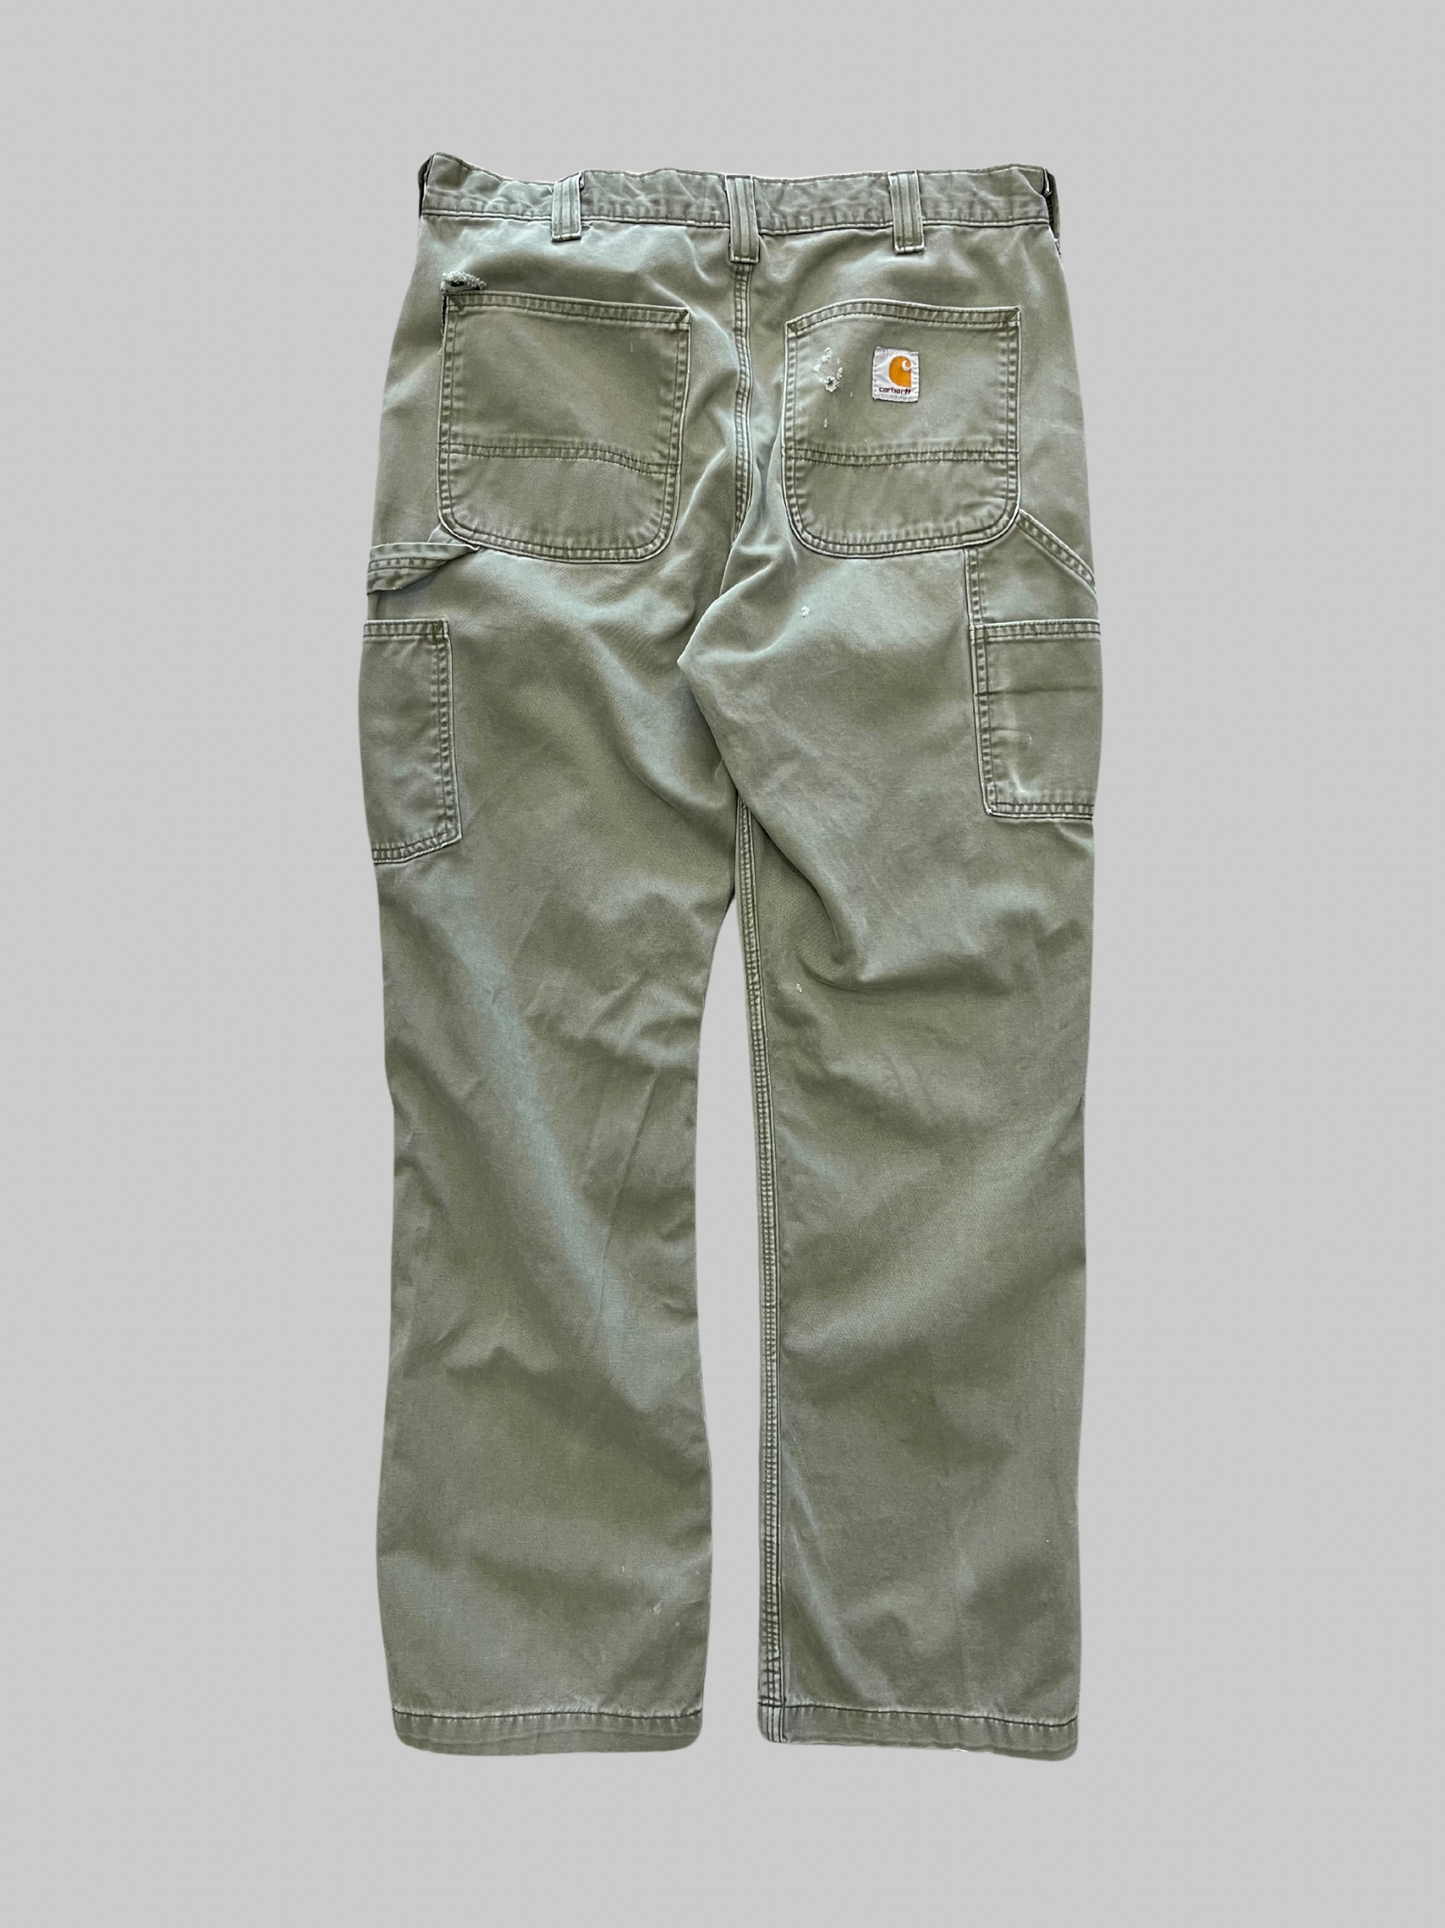 Green 00s Carhartt Work Wear Pants (32x30)